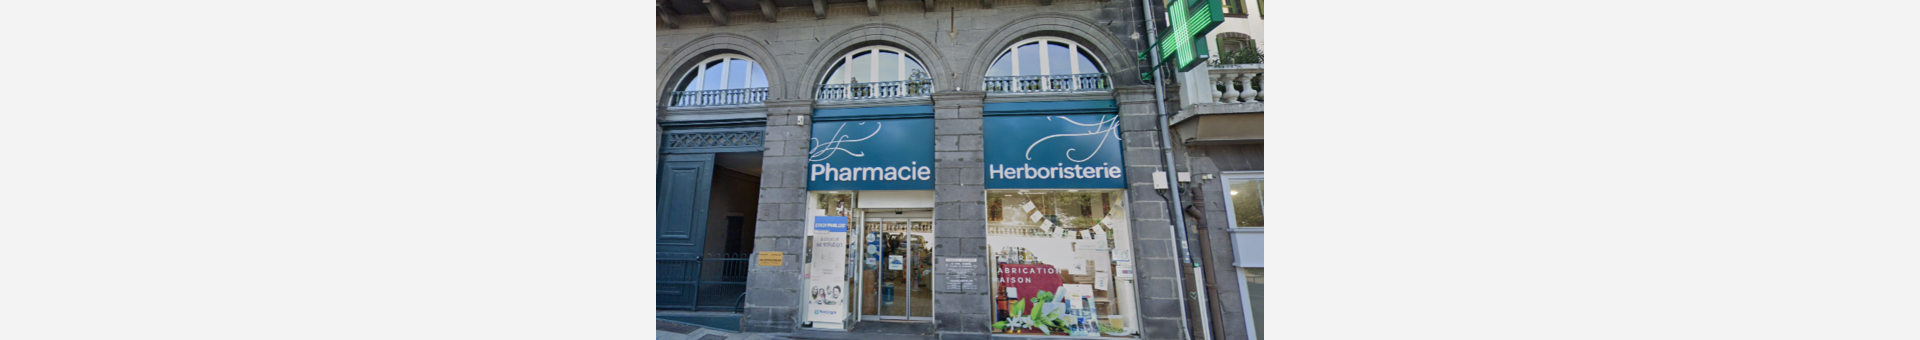 Pharmacie Herboristerie Saint Herem,Clermont-Ferrand